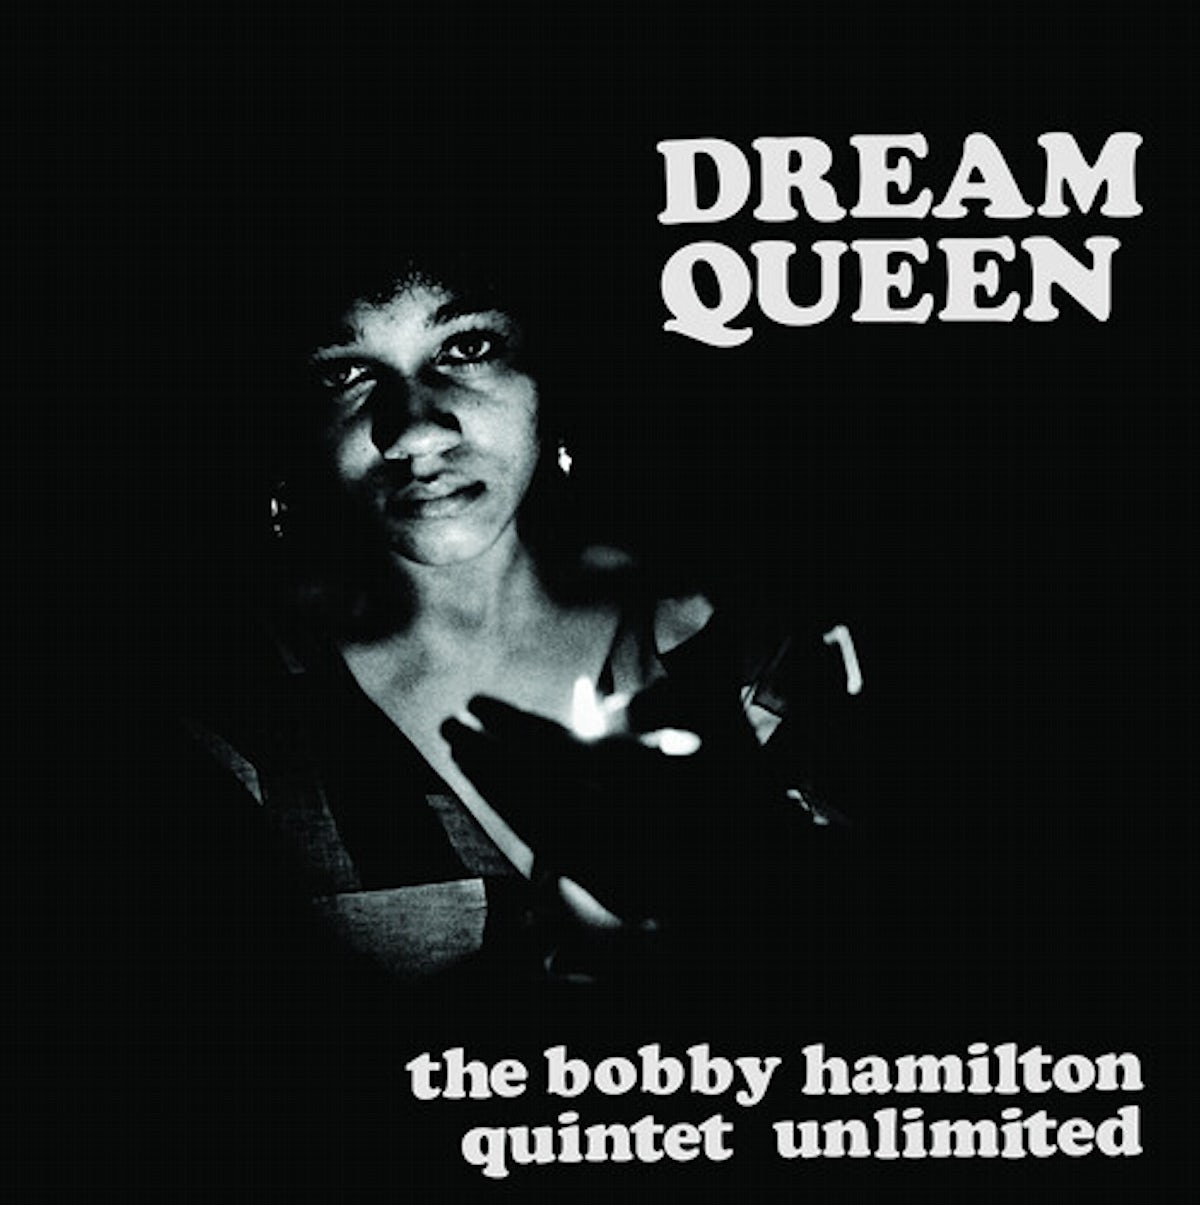 The Bobby Hamilton Quintet Unlimited - Dream Queen LP (Now Again Reissue)